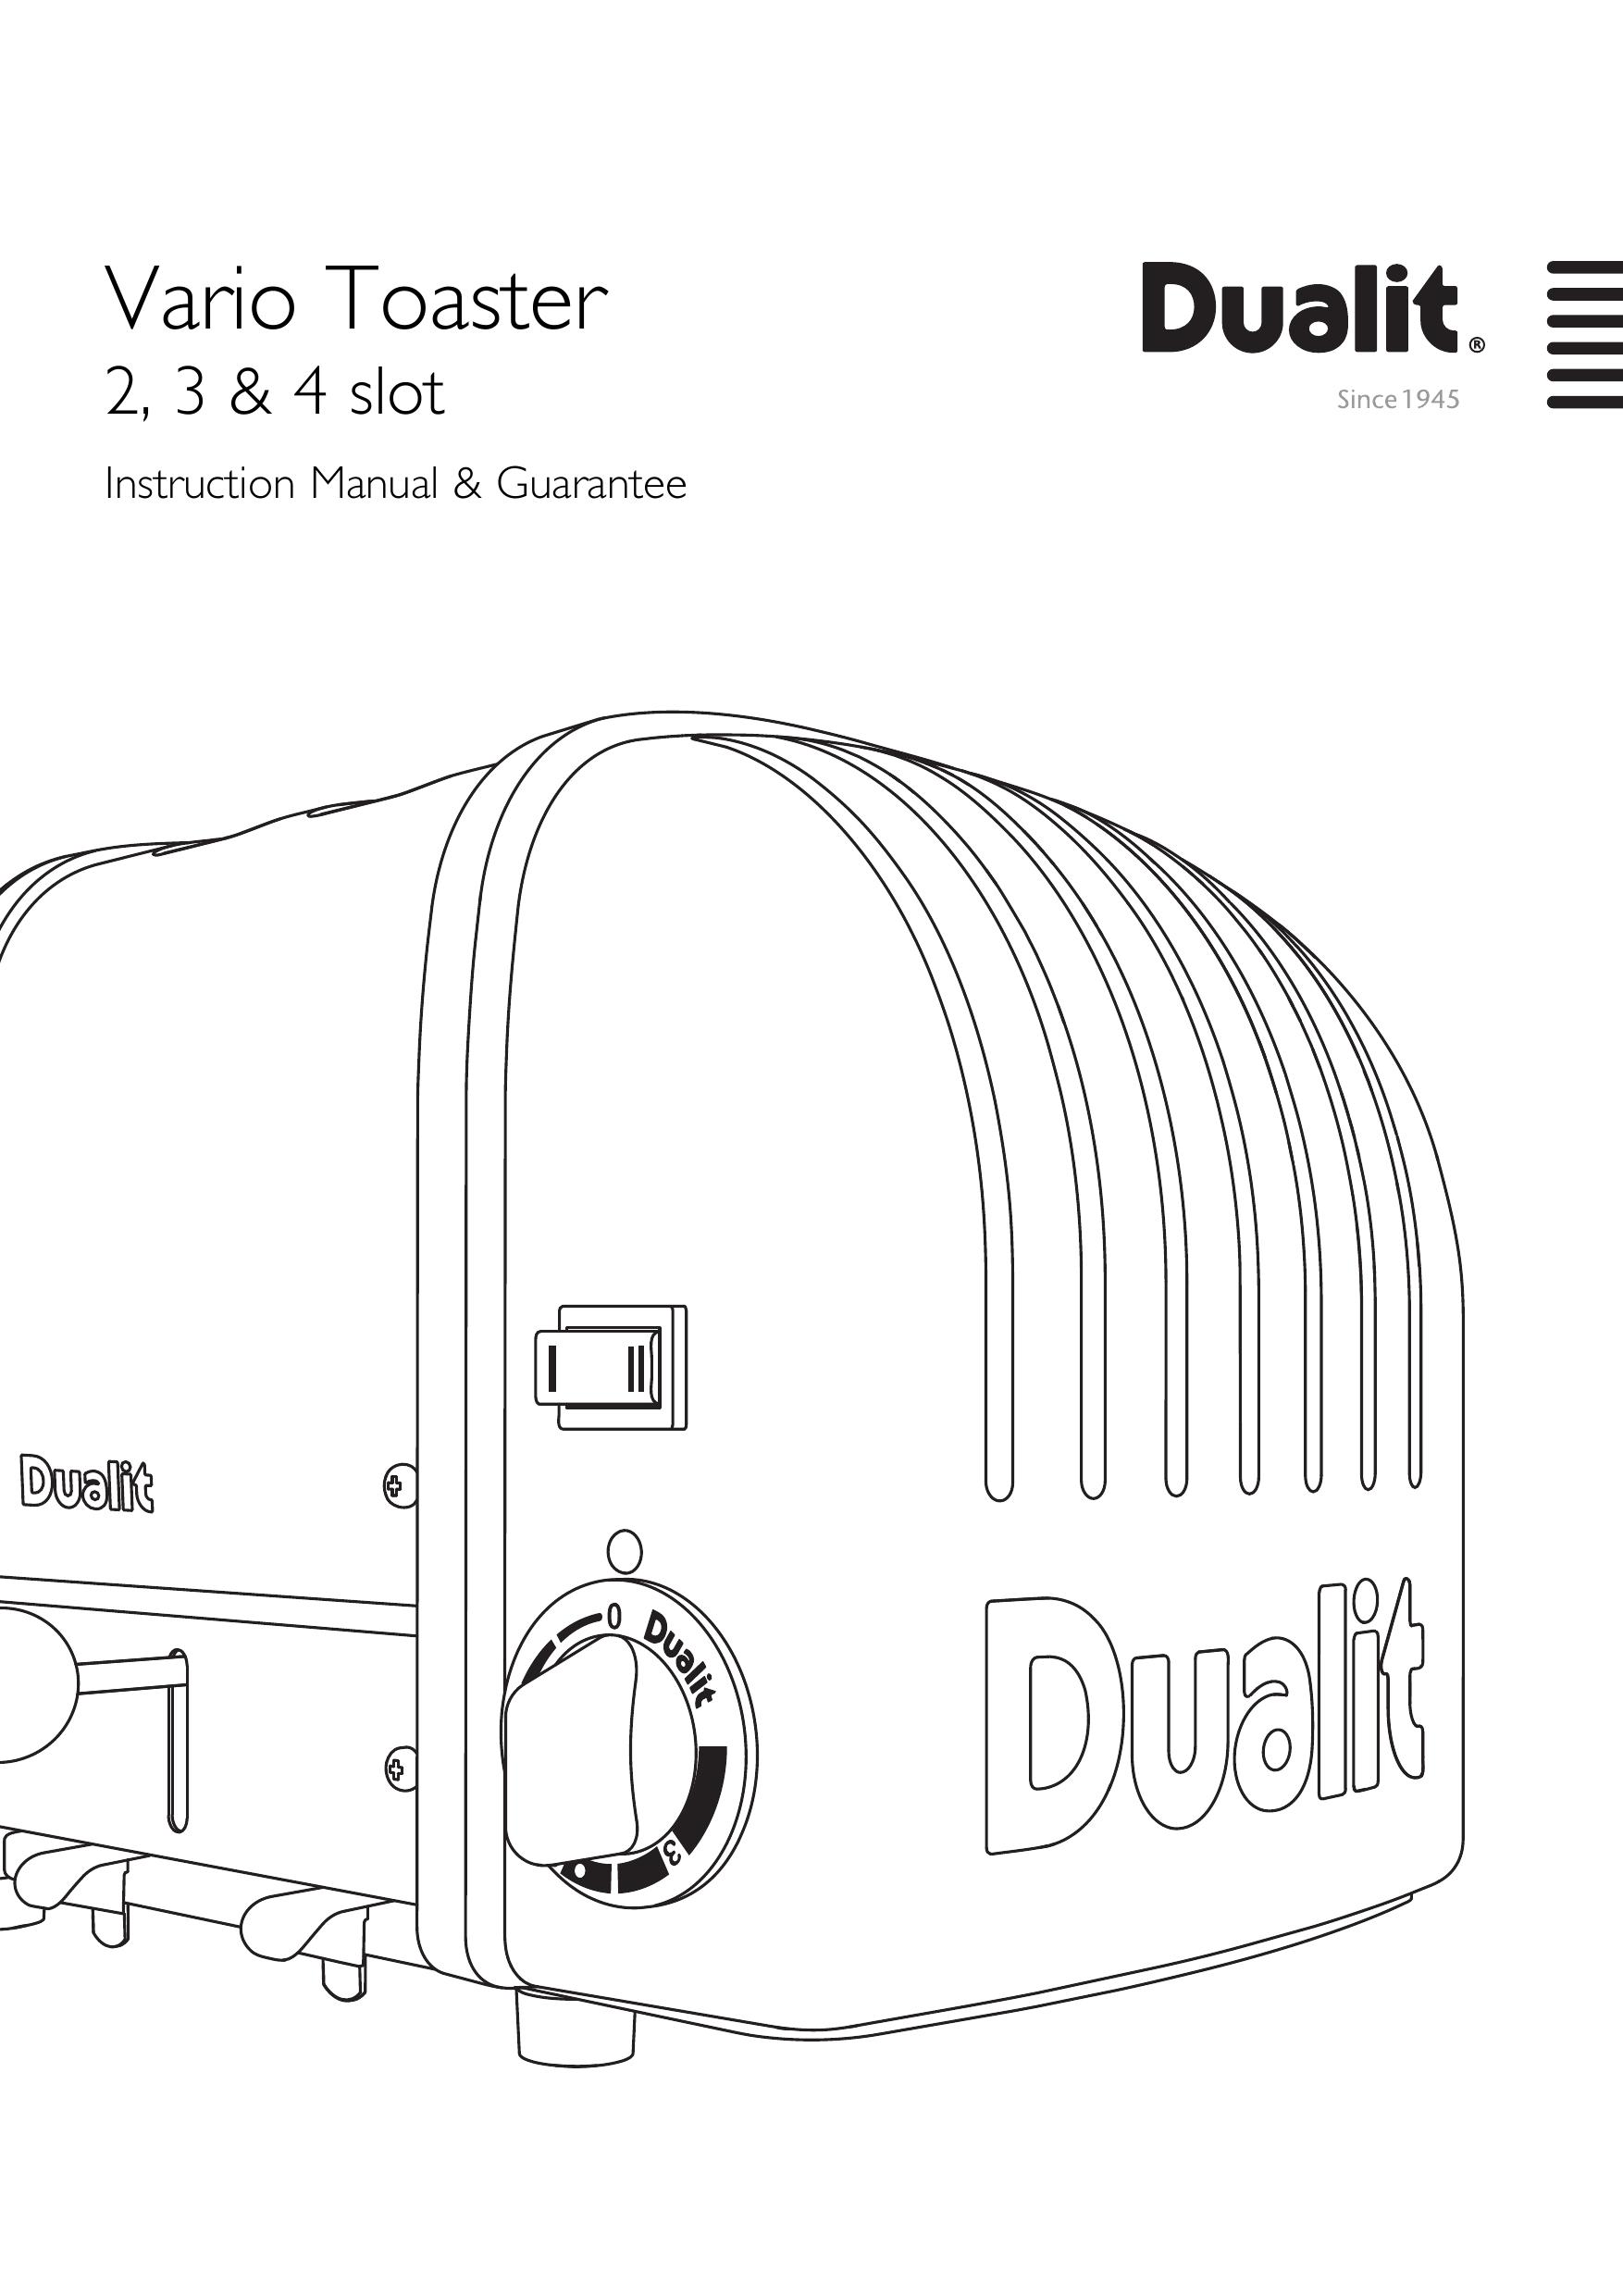 Dualit 20298 Toaster User Manual